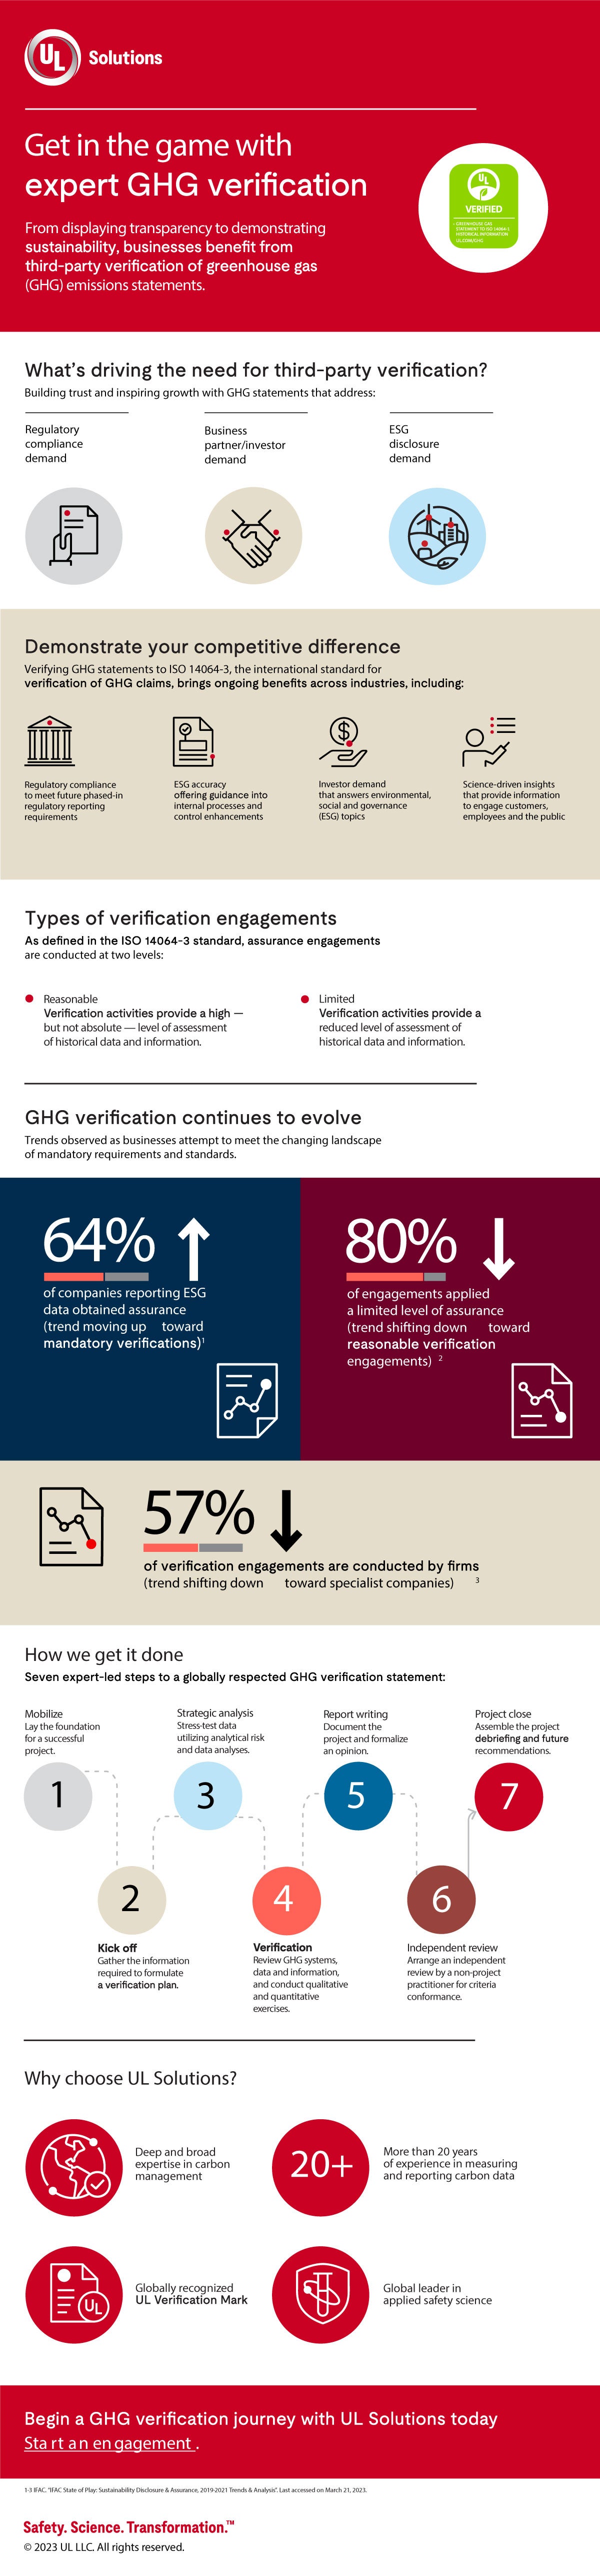  GHG verification infographic